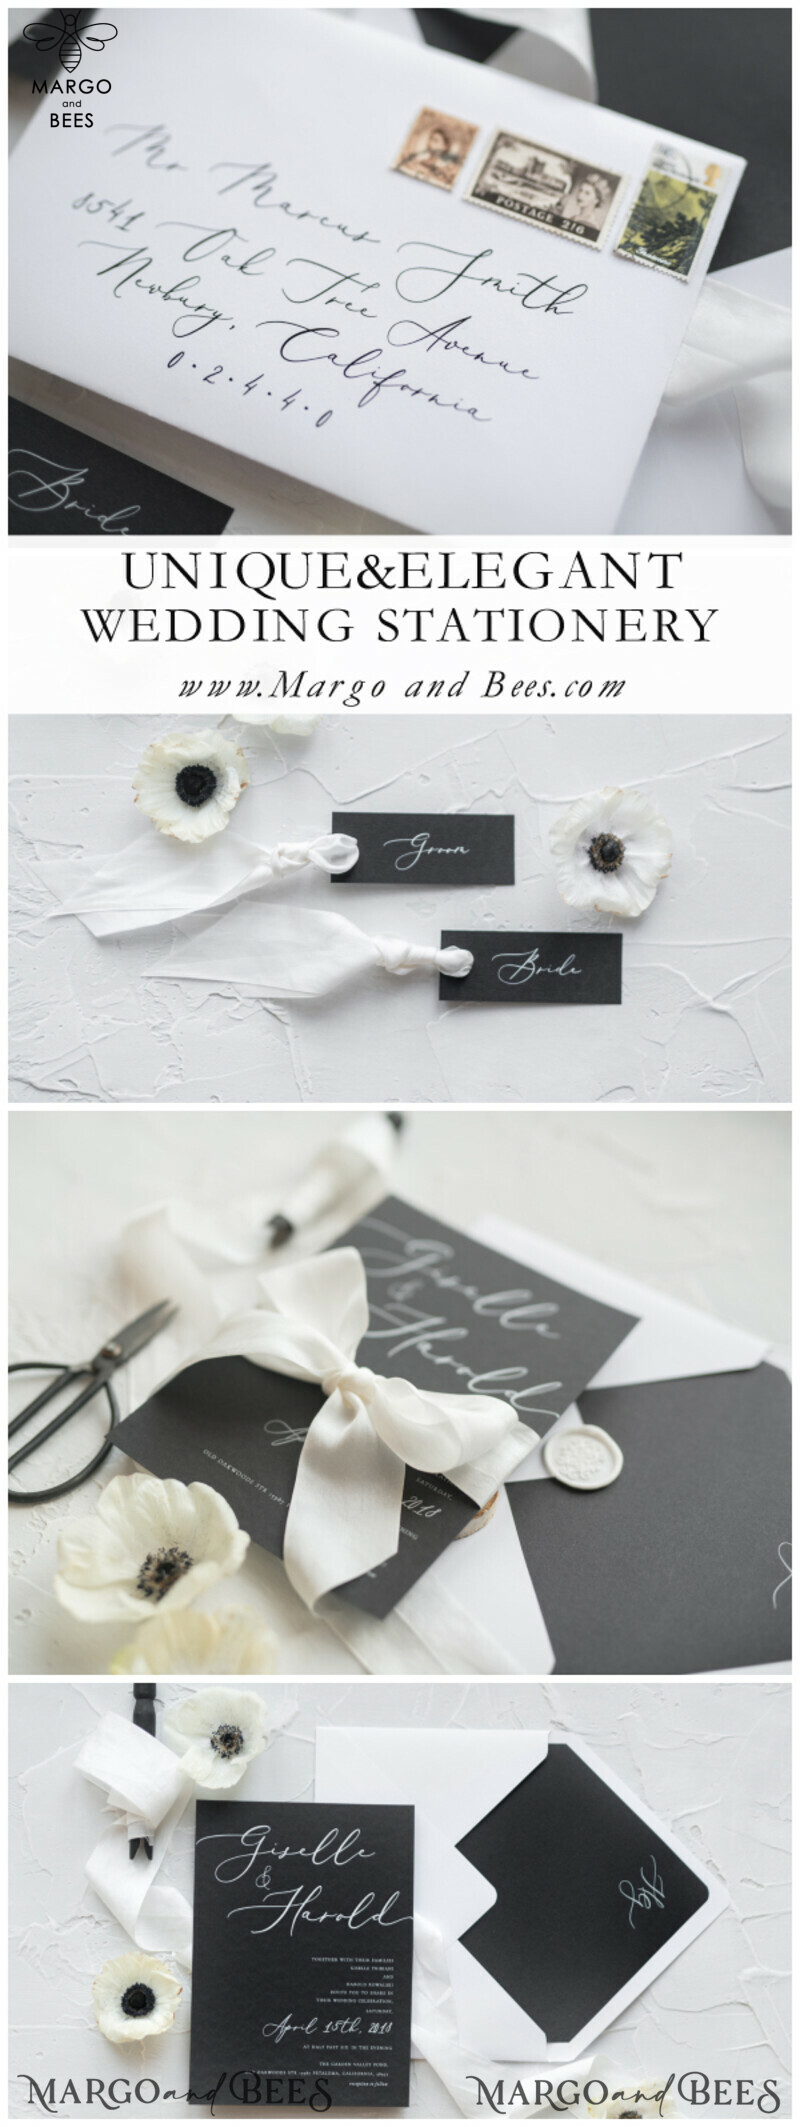 Stylish and Chic: Minimalistic Black and Elegant White Wedding Invitations with Bespoke and Modern Handmade Invitation Suite-21